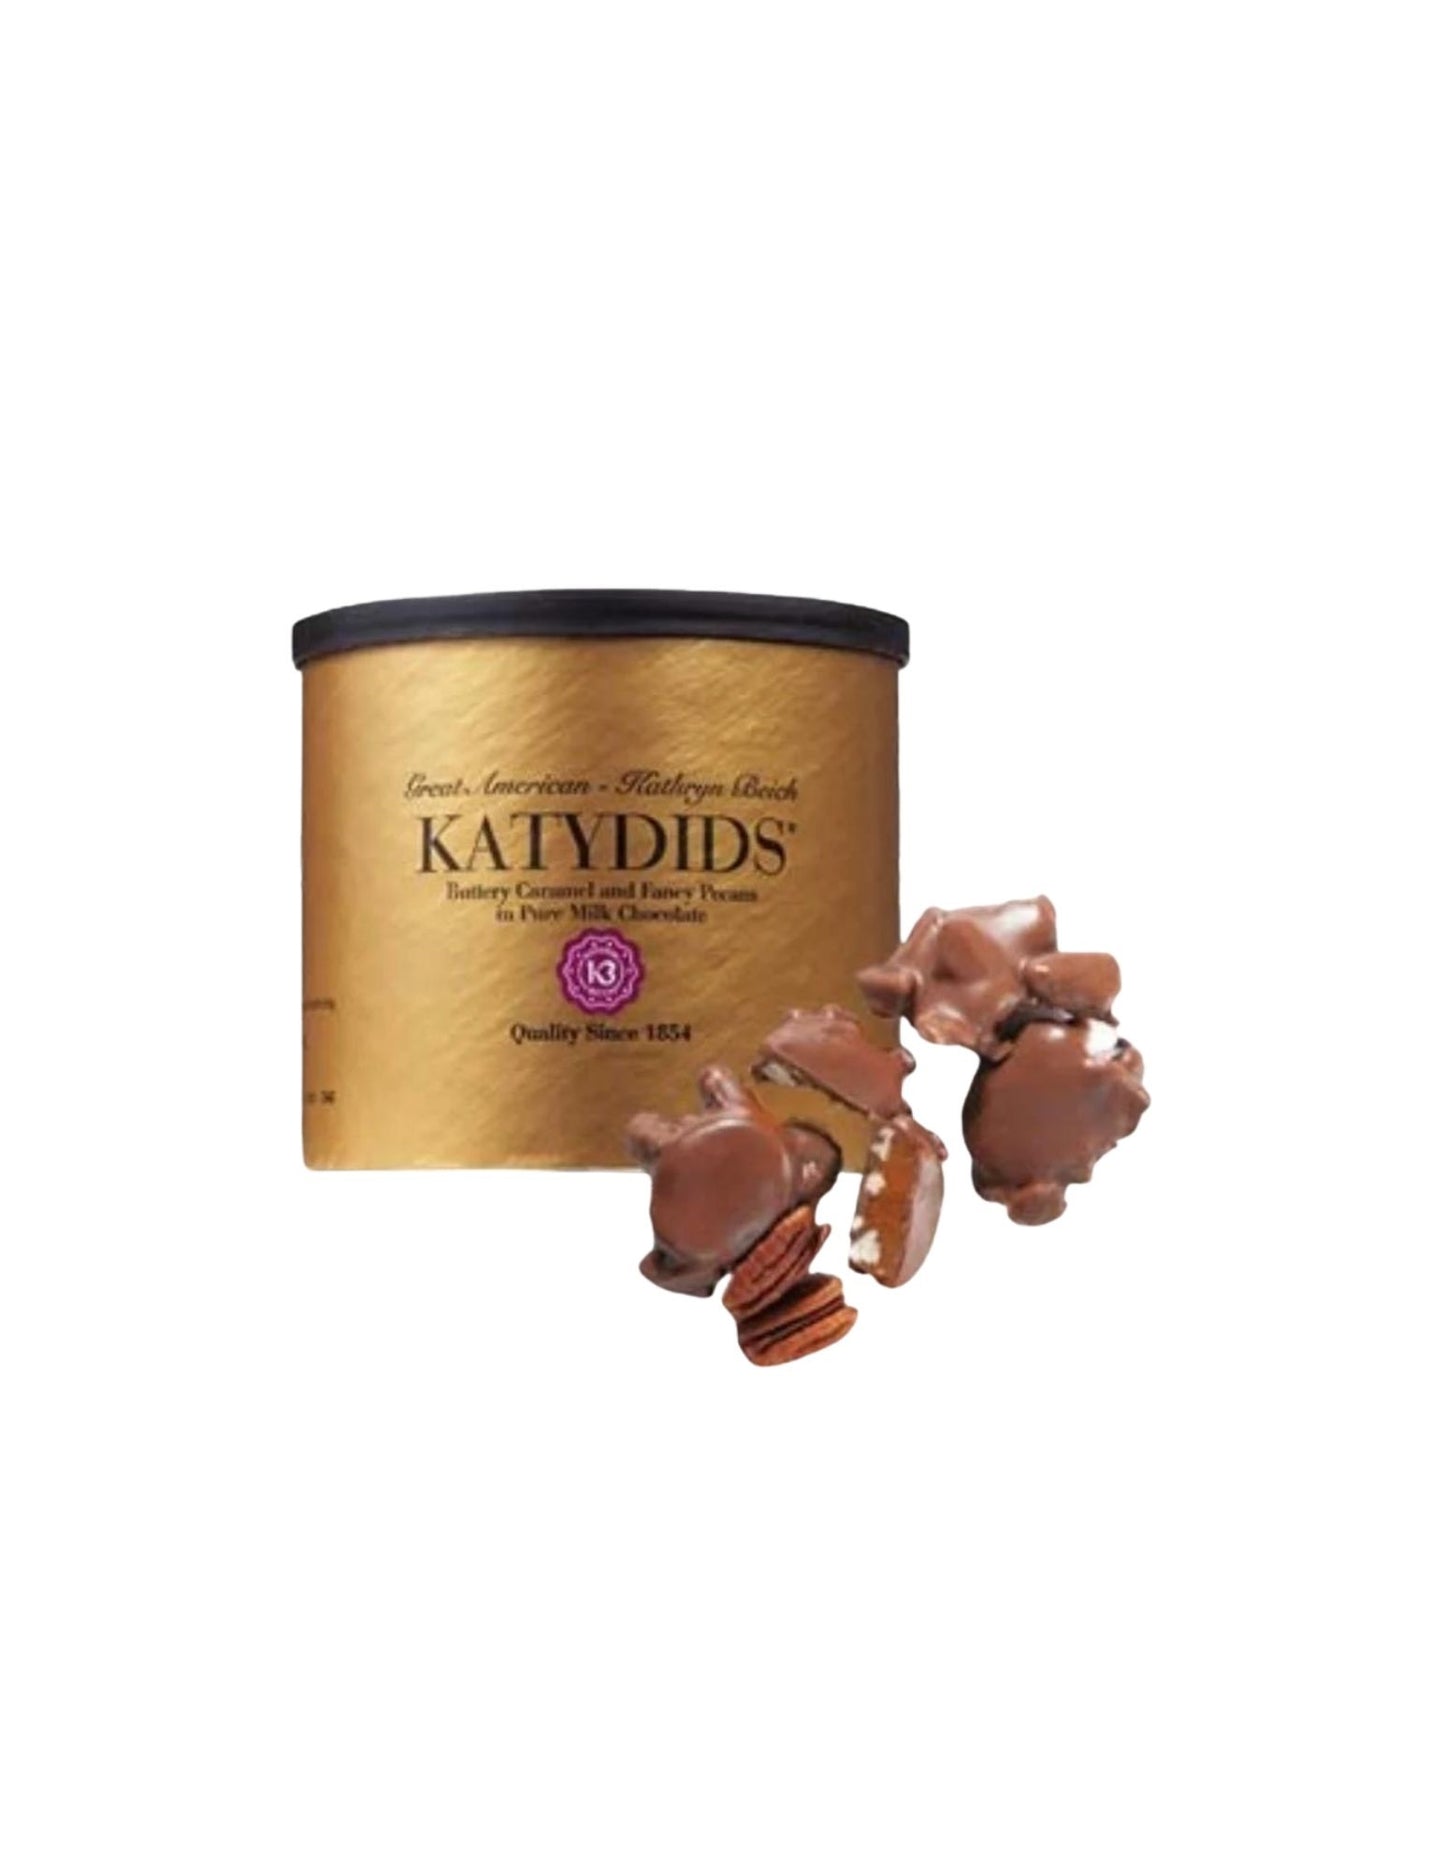 Katydids- 8 oz Tin Can